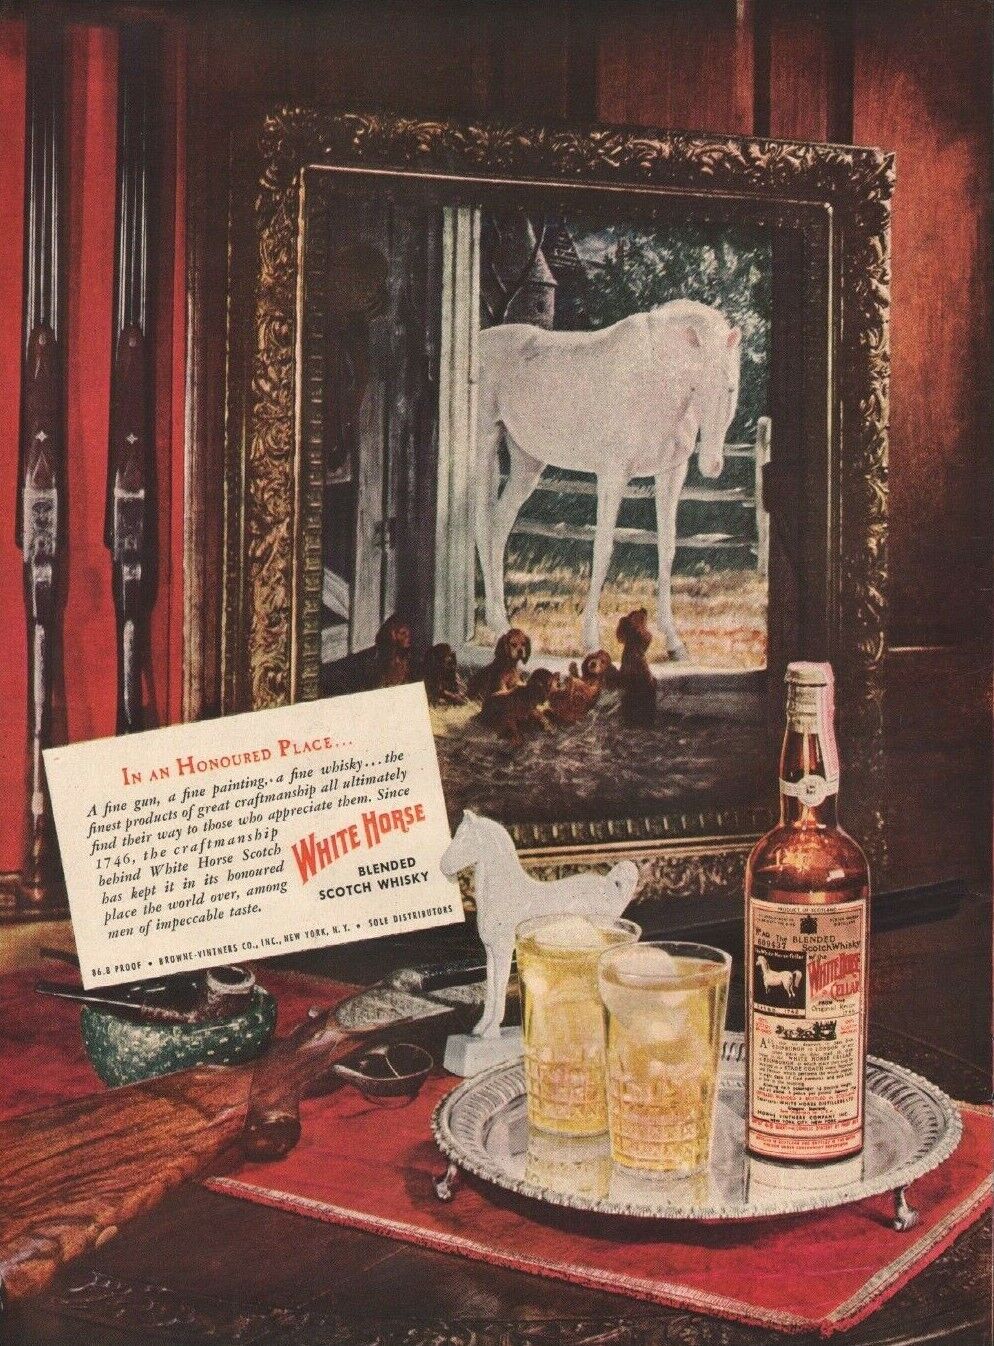 1948 White Horse Blended Scotch Whisky - Vintage Print Advertisement